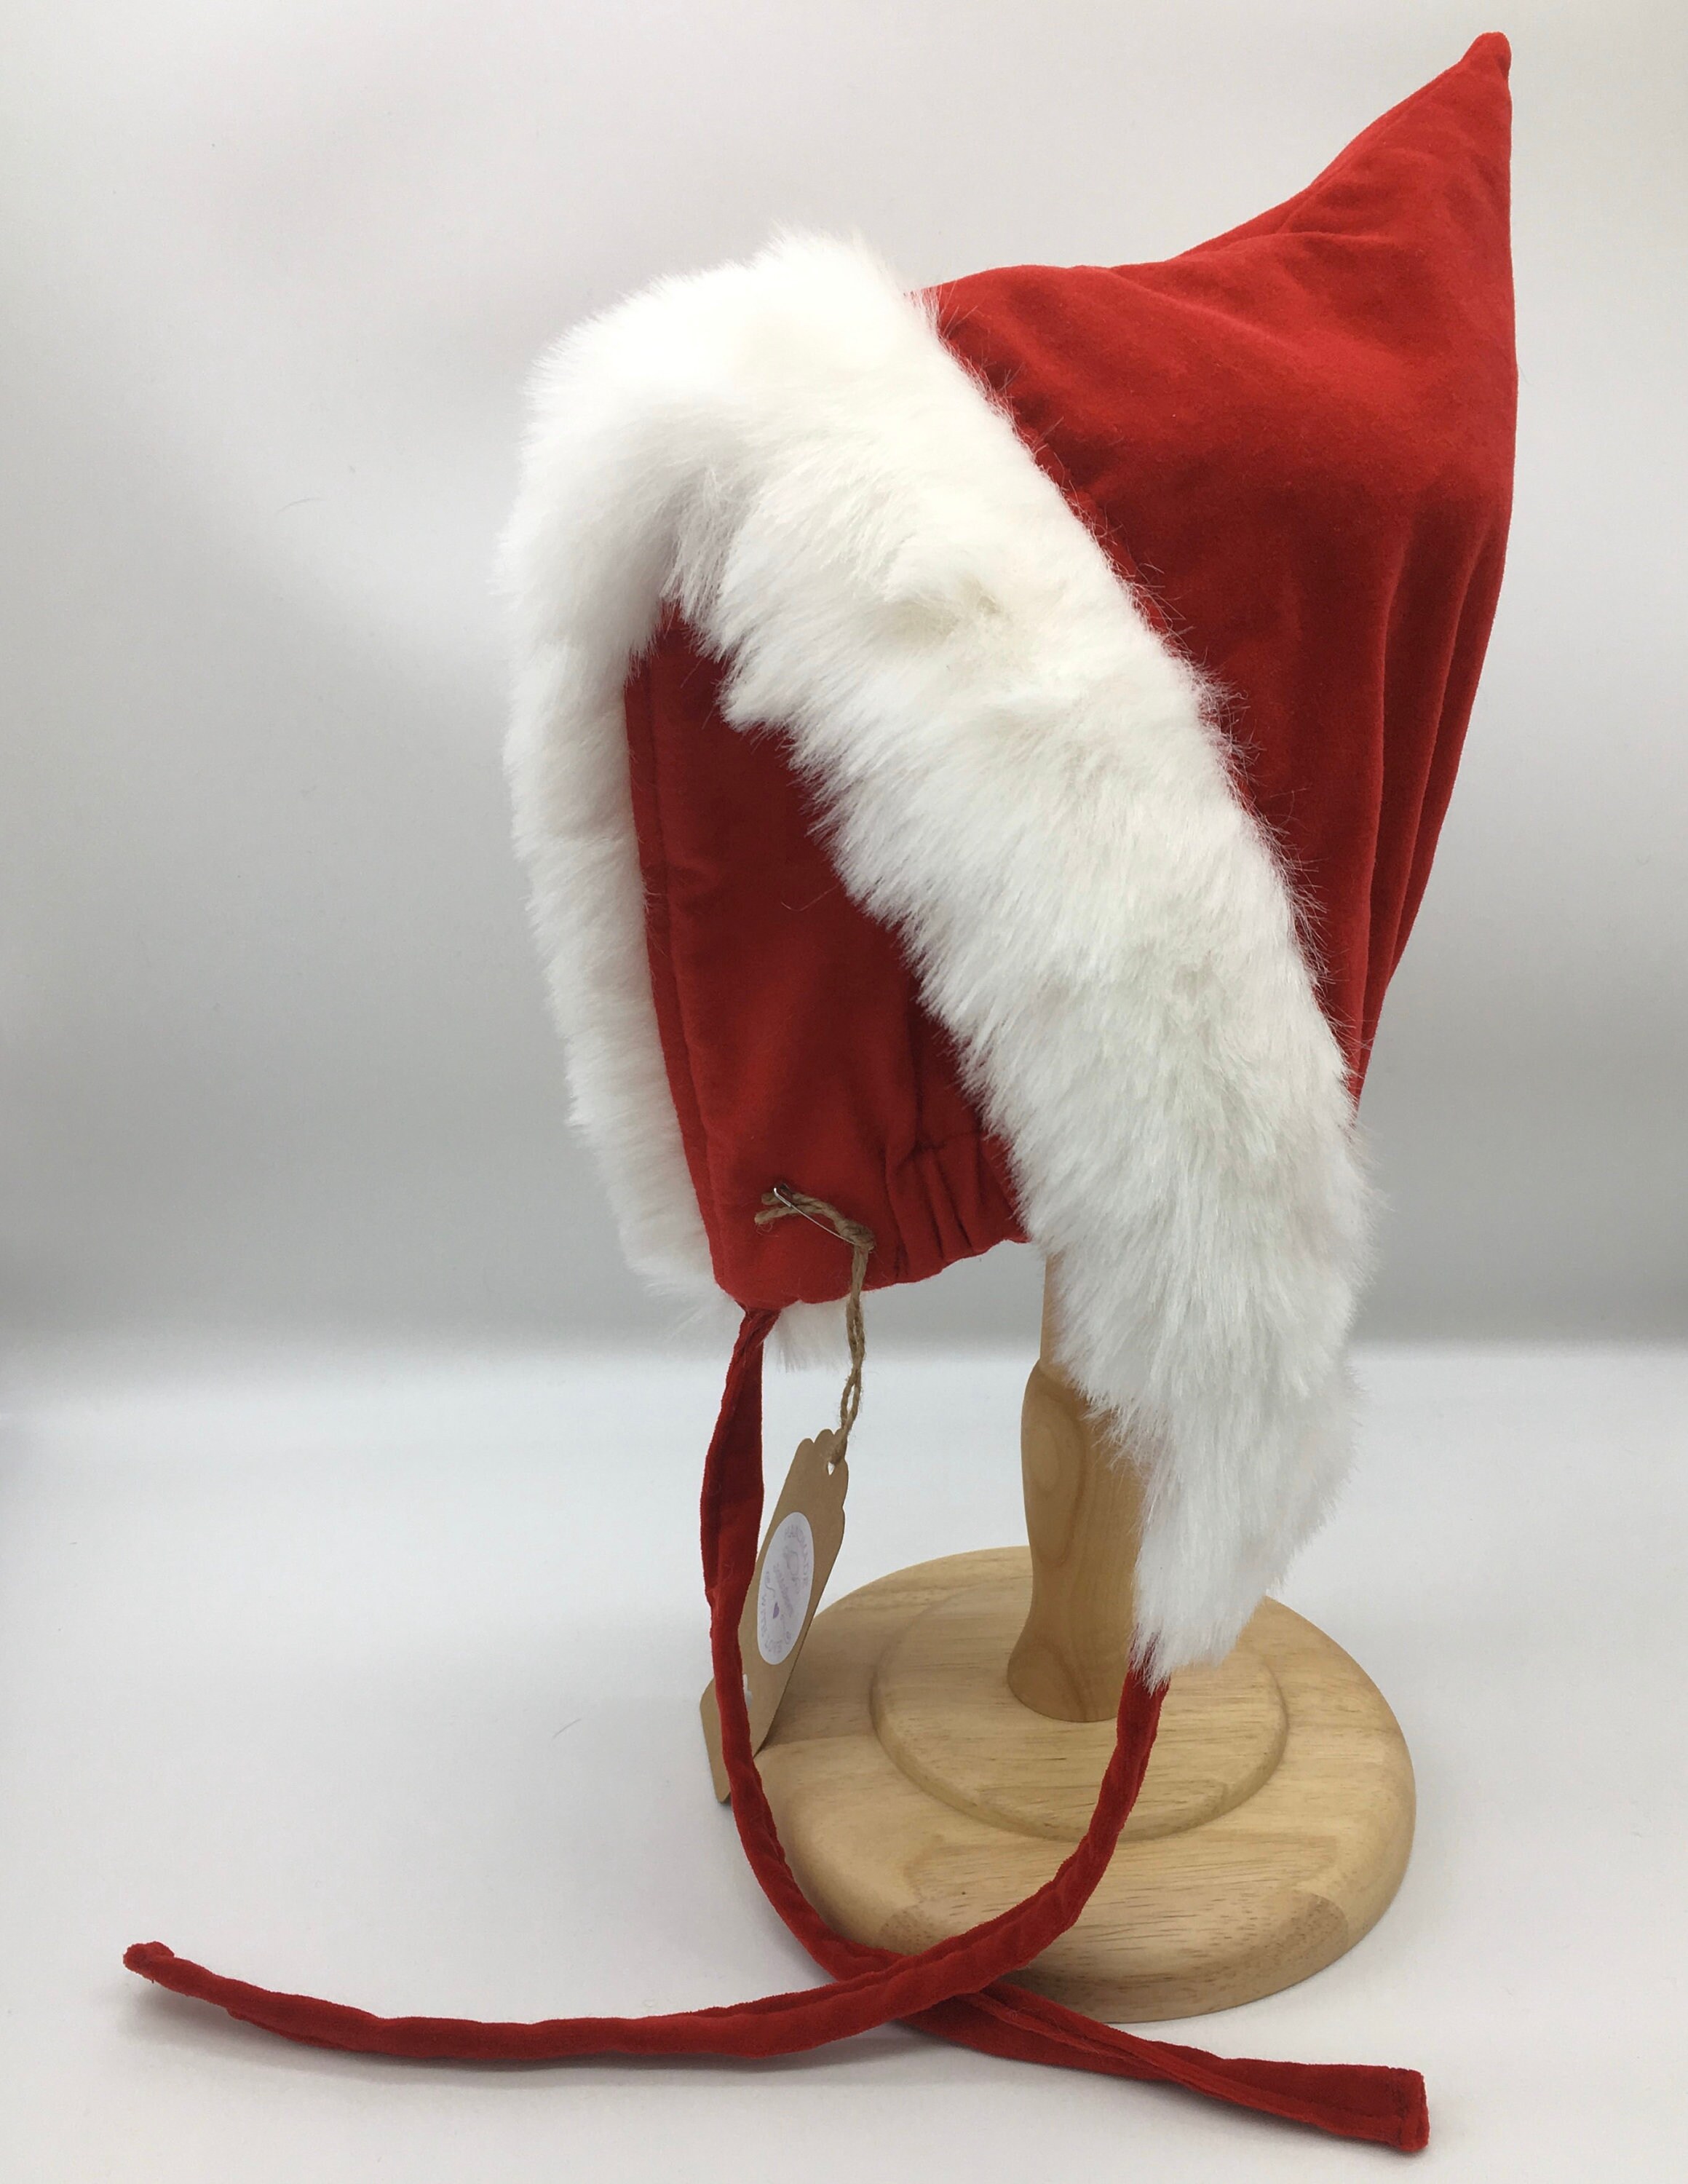 DeHasion 6 Packs Chistmas Hats Christmas Decoration Santa Hat for Adults Christmas Party Supply Big Santa Hat Comfort Liner Red Velvet 